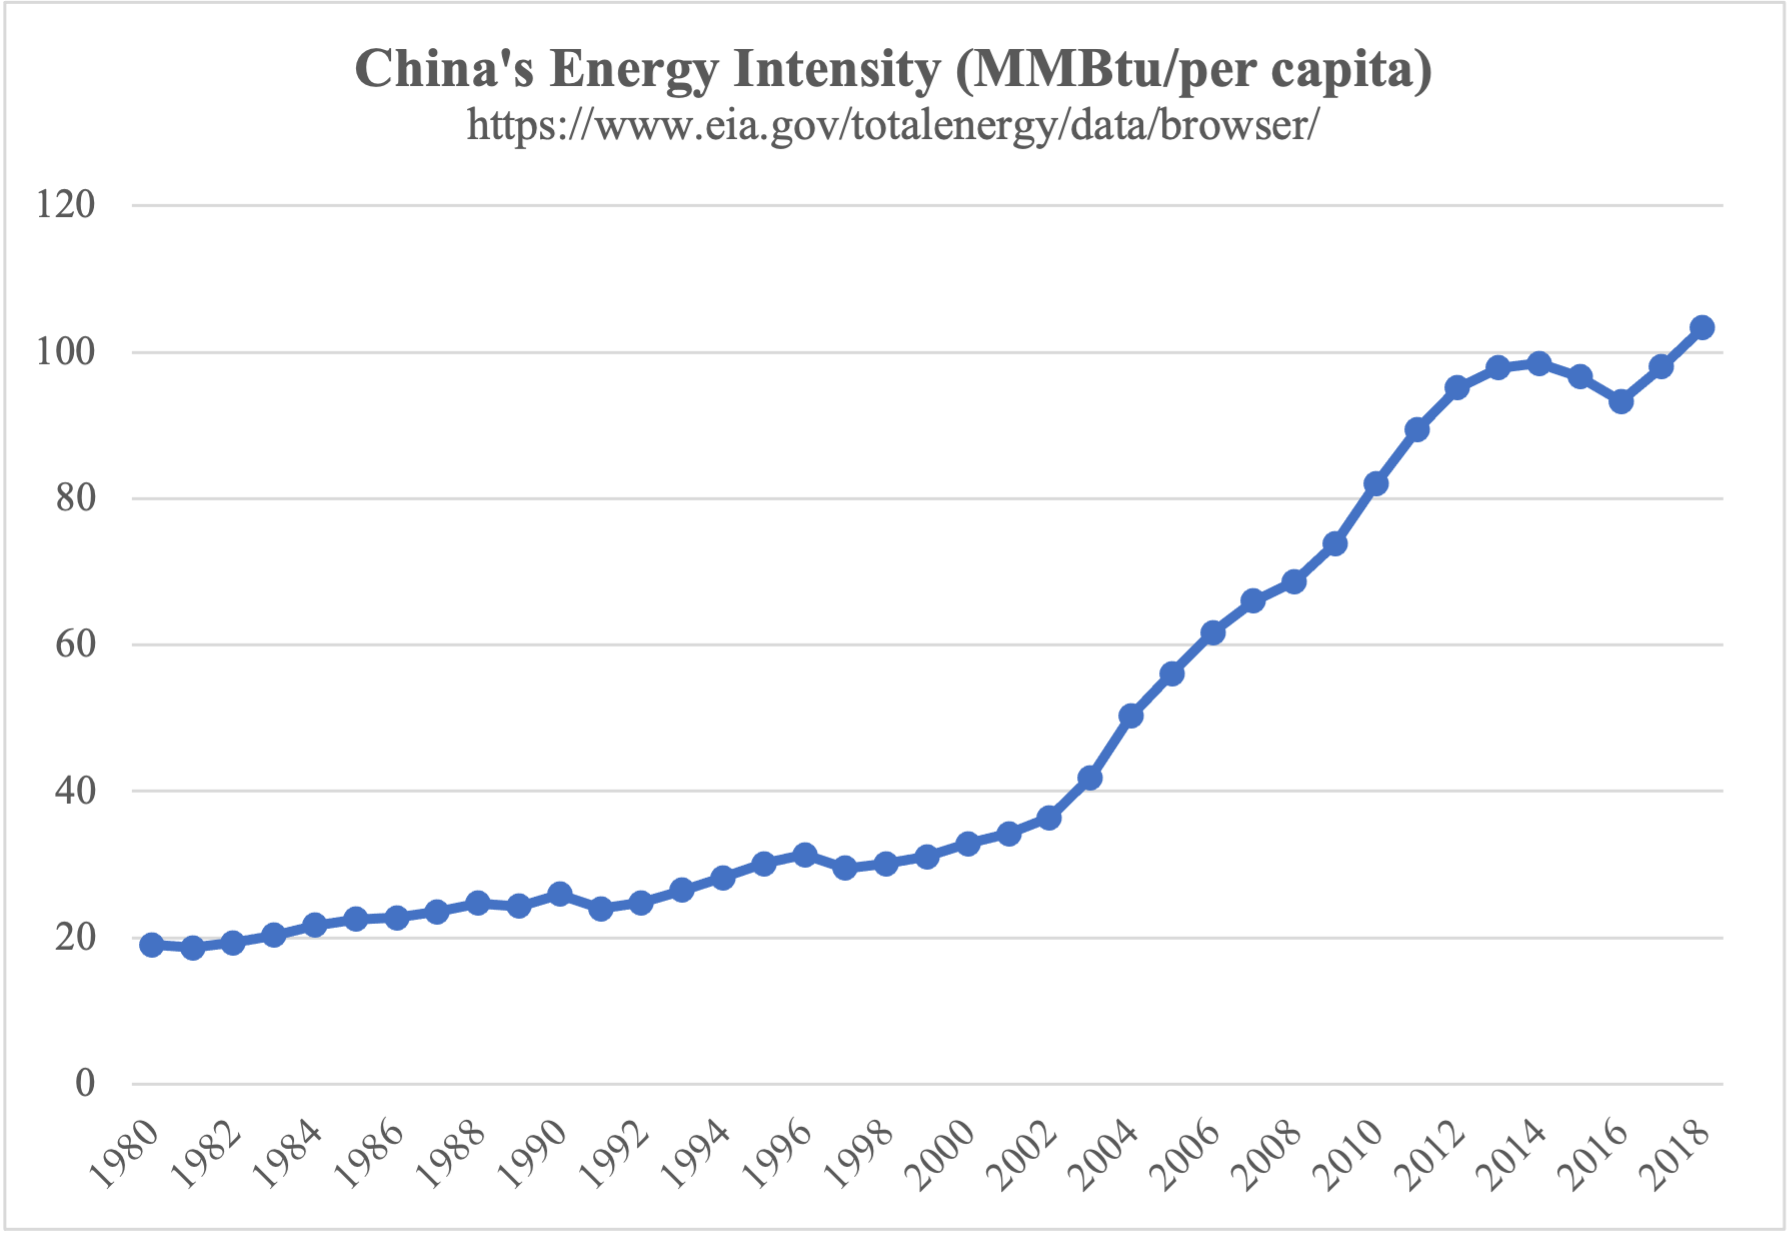 Figure 6. China’s energy intensity (MMBtu/per capita)https://www.eia.gov/totalenergy/data/browser/